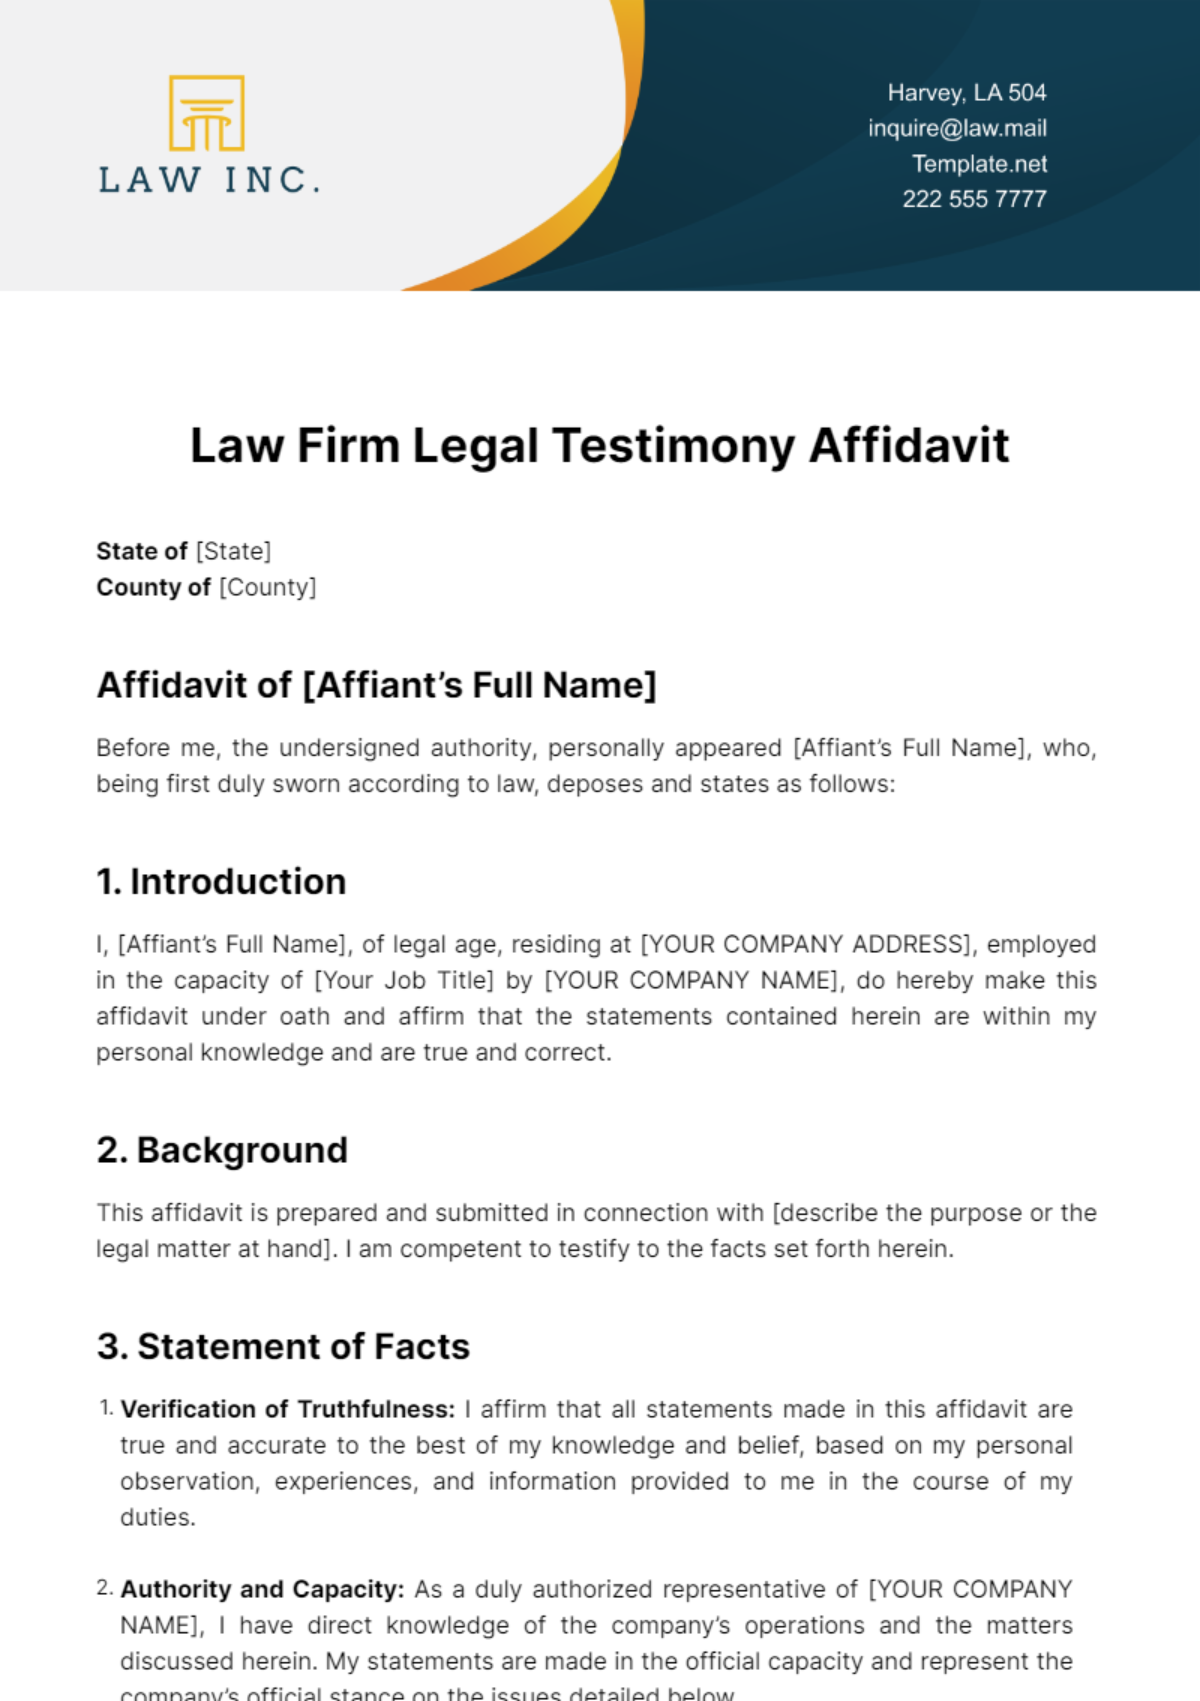 Law Firm Legal Testimony Affidavit Template